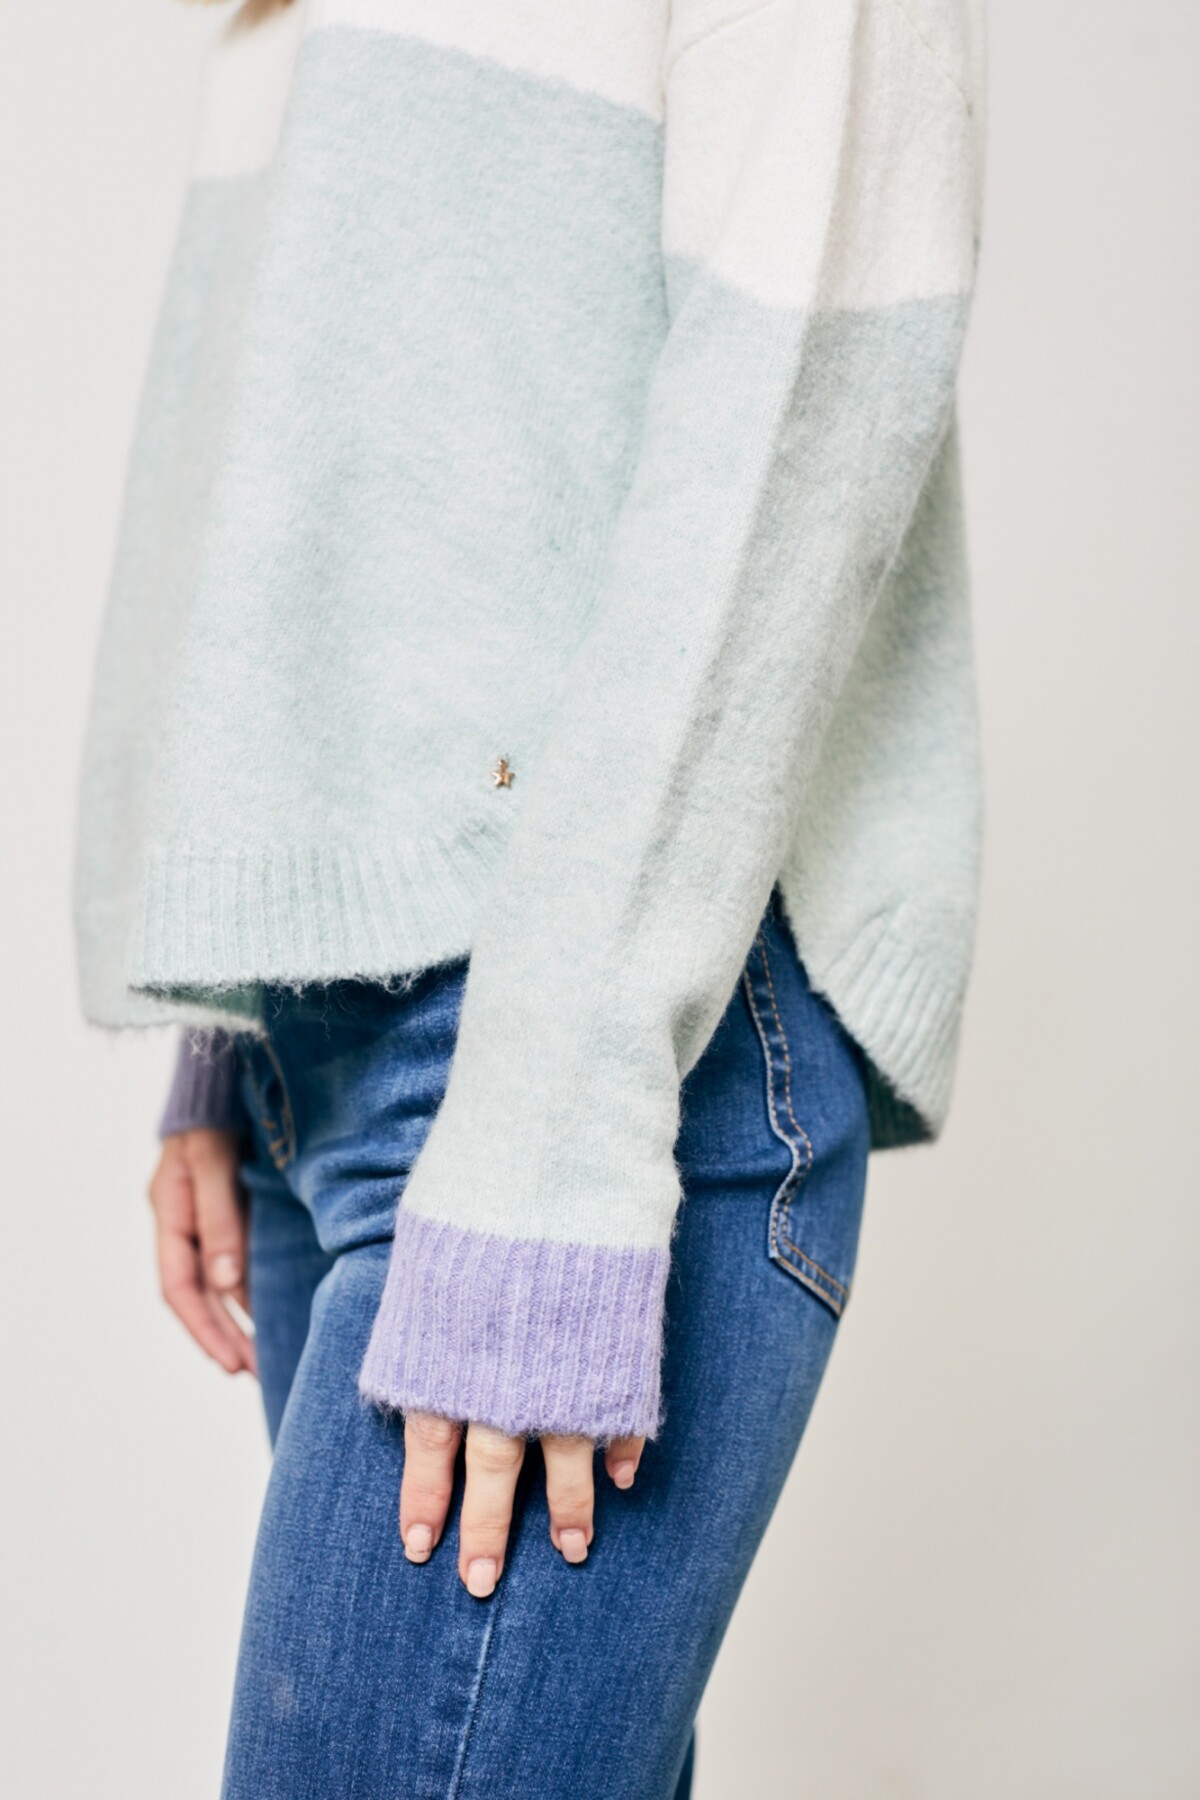 Sweater Intarsia Menta